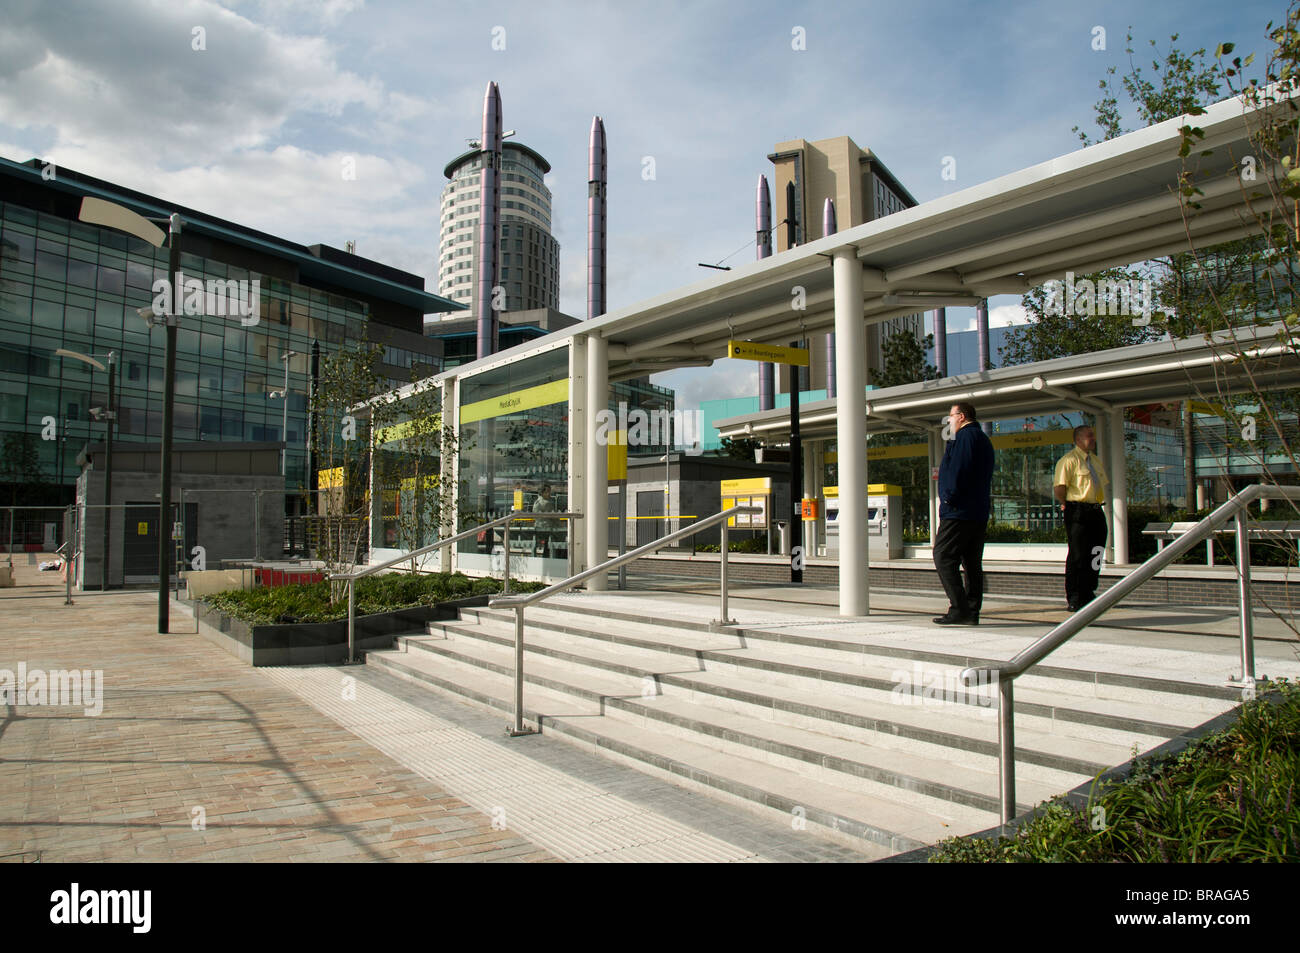 The Metrolink tram station at MediaCityUK, Salford Quays, Manchester, England, UK Stock Photo